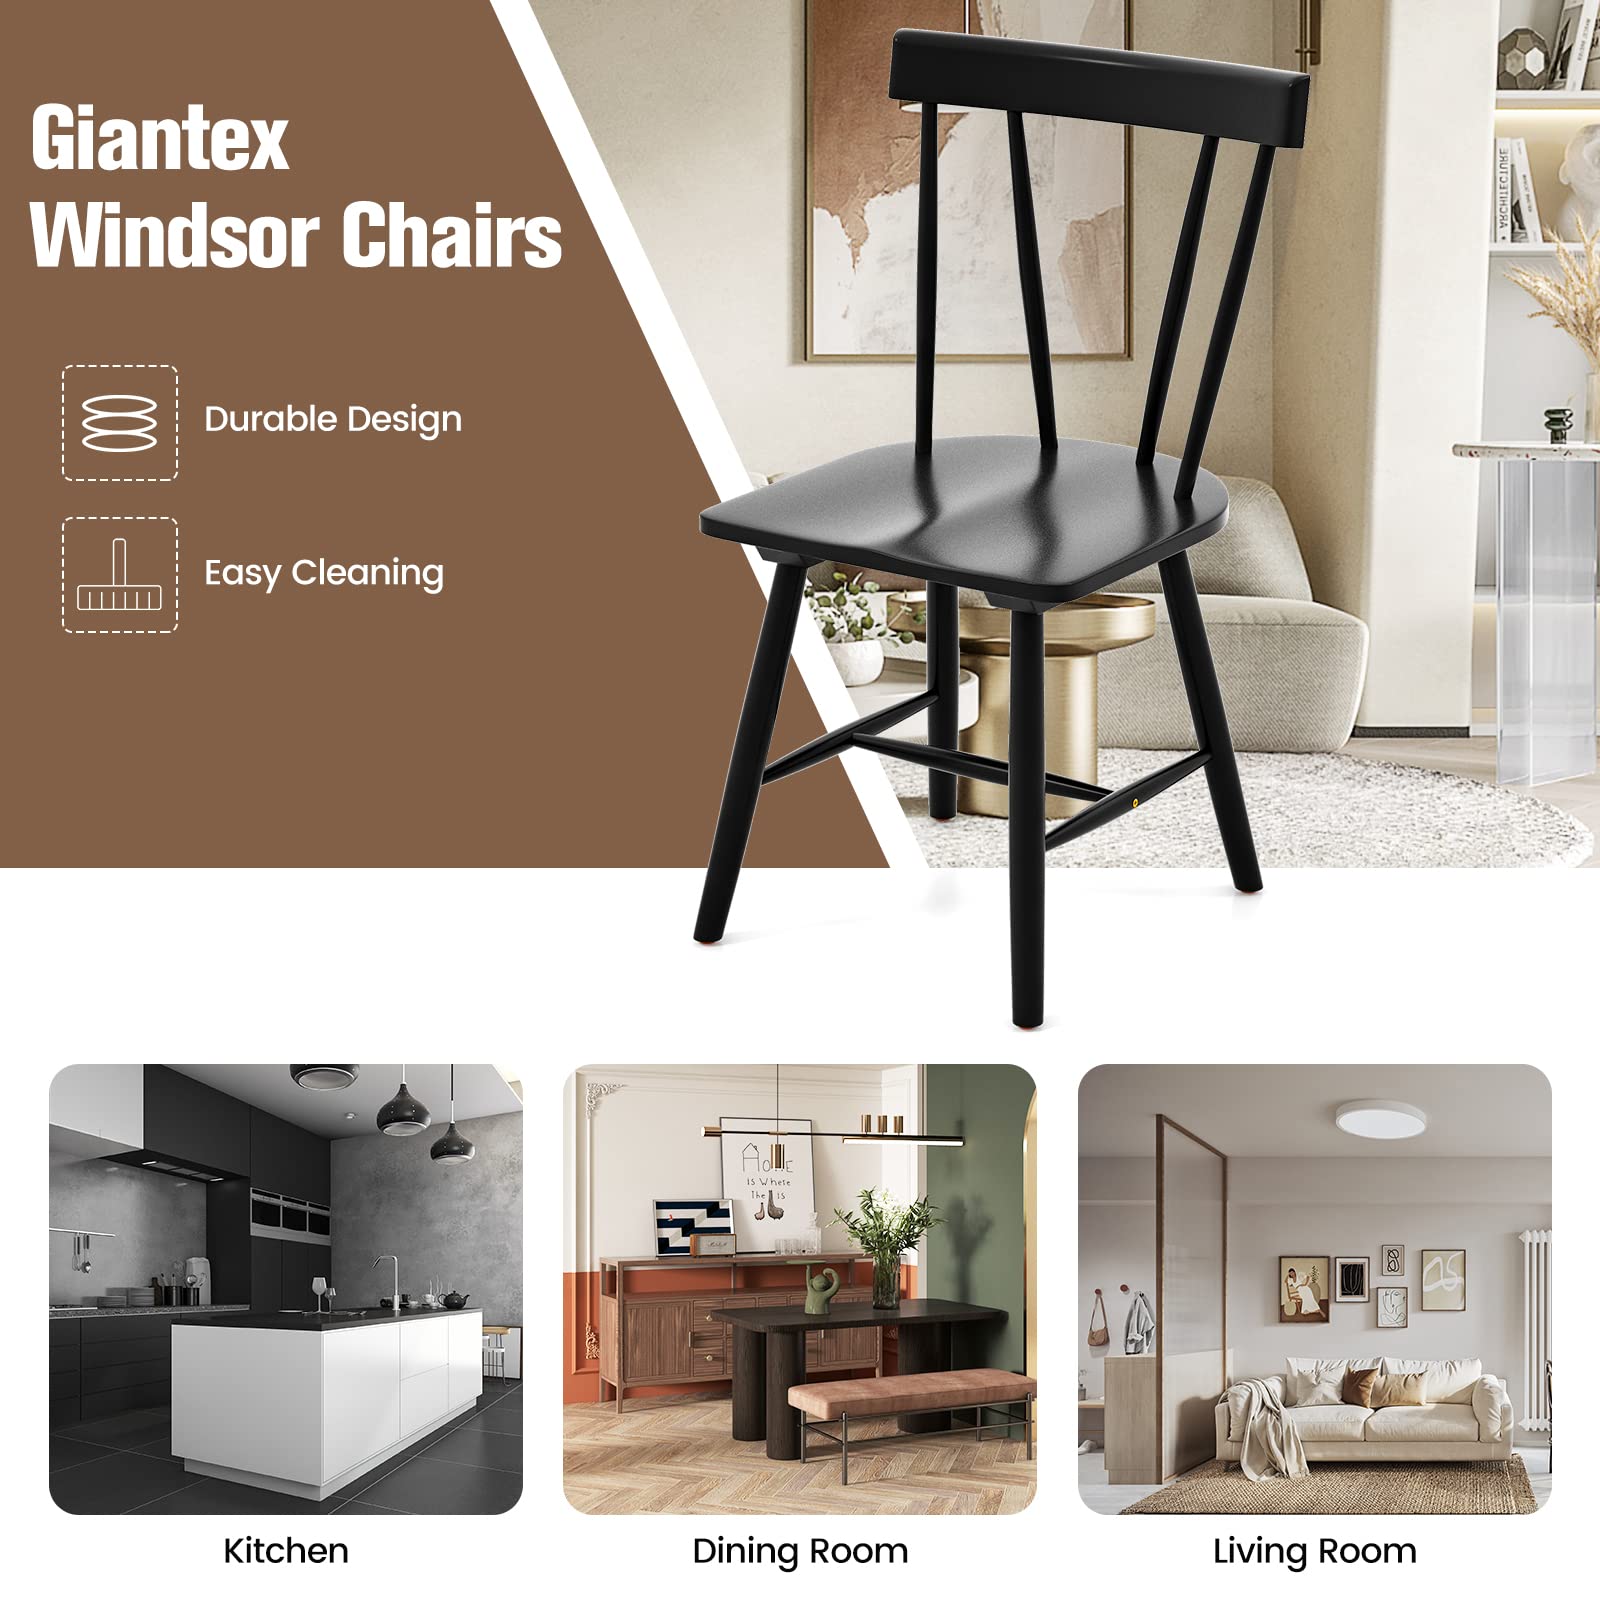 Giantex Windsor Chairs